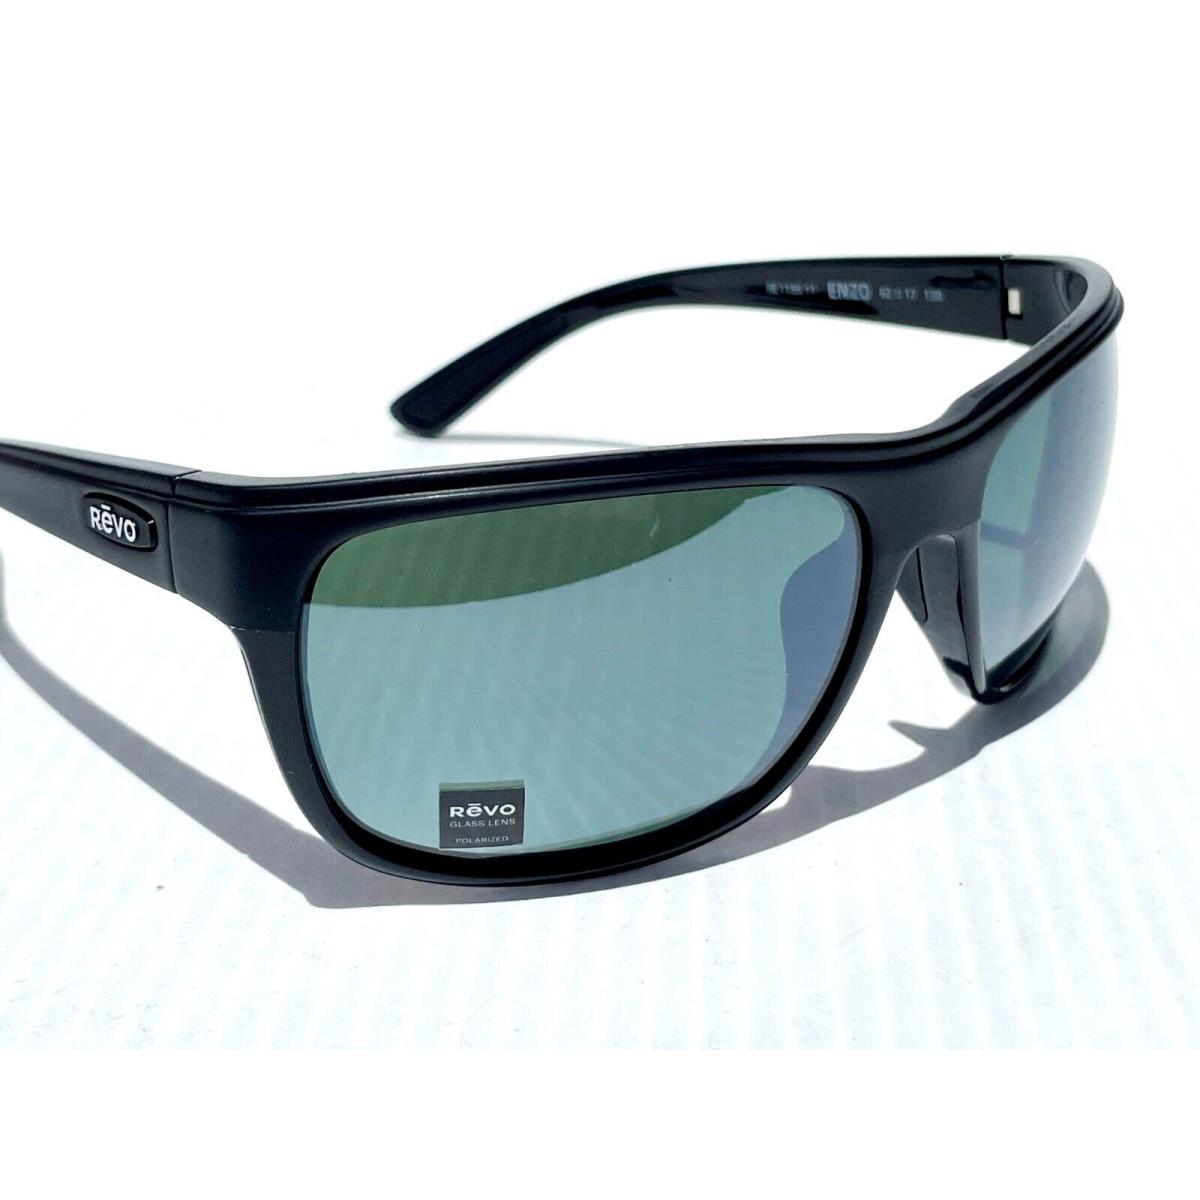 Revo sunglasses Enzo - Black Frame, Silver Green Lens